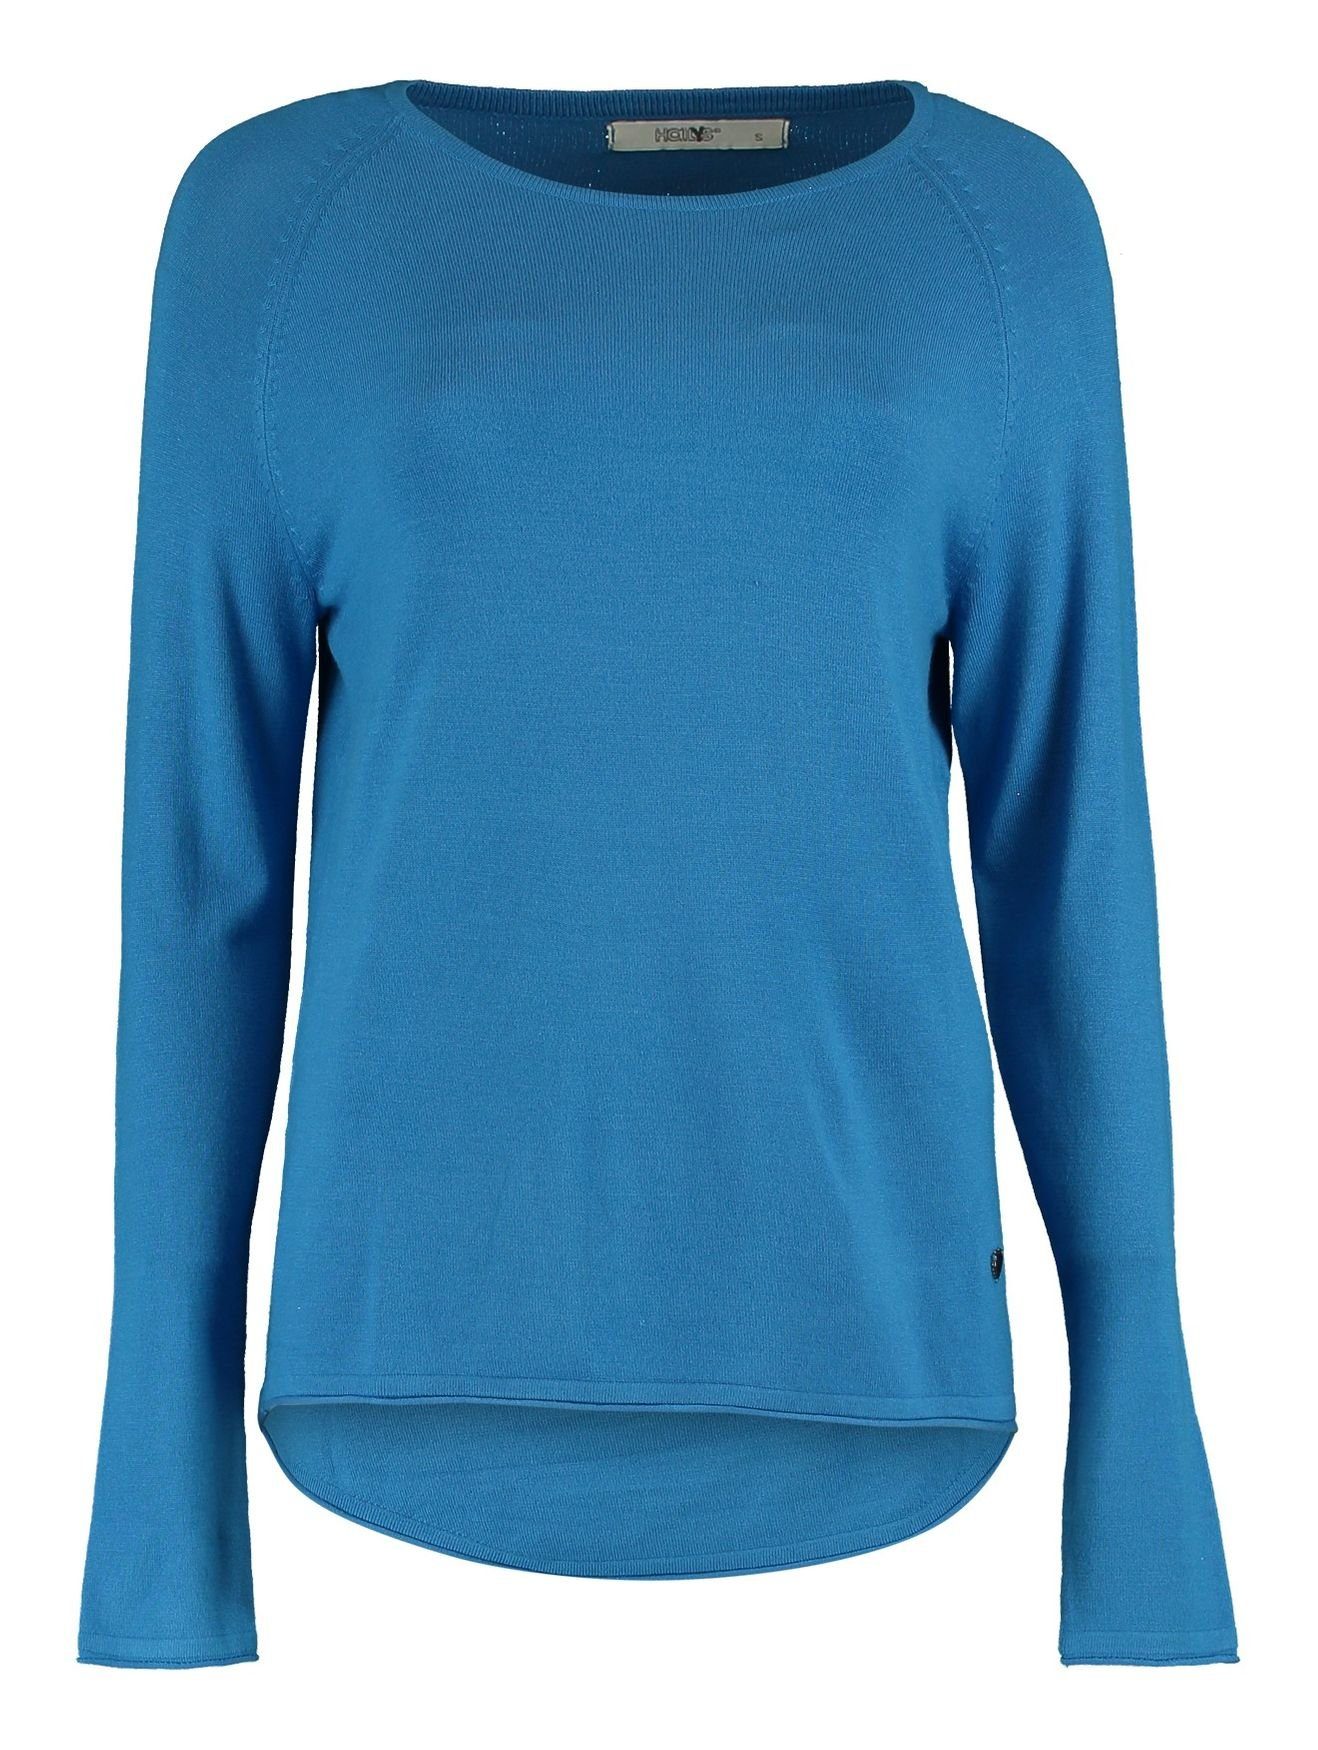 HaILY’S Longpullover Dünner Pullover Rundhals Langarm Basic Shirt Ma44rin 5069 in Blau